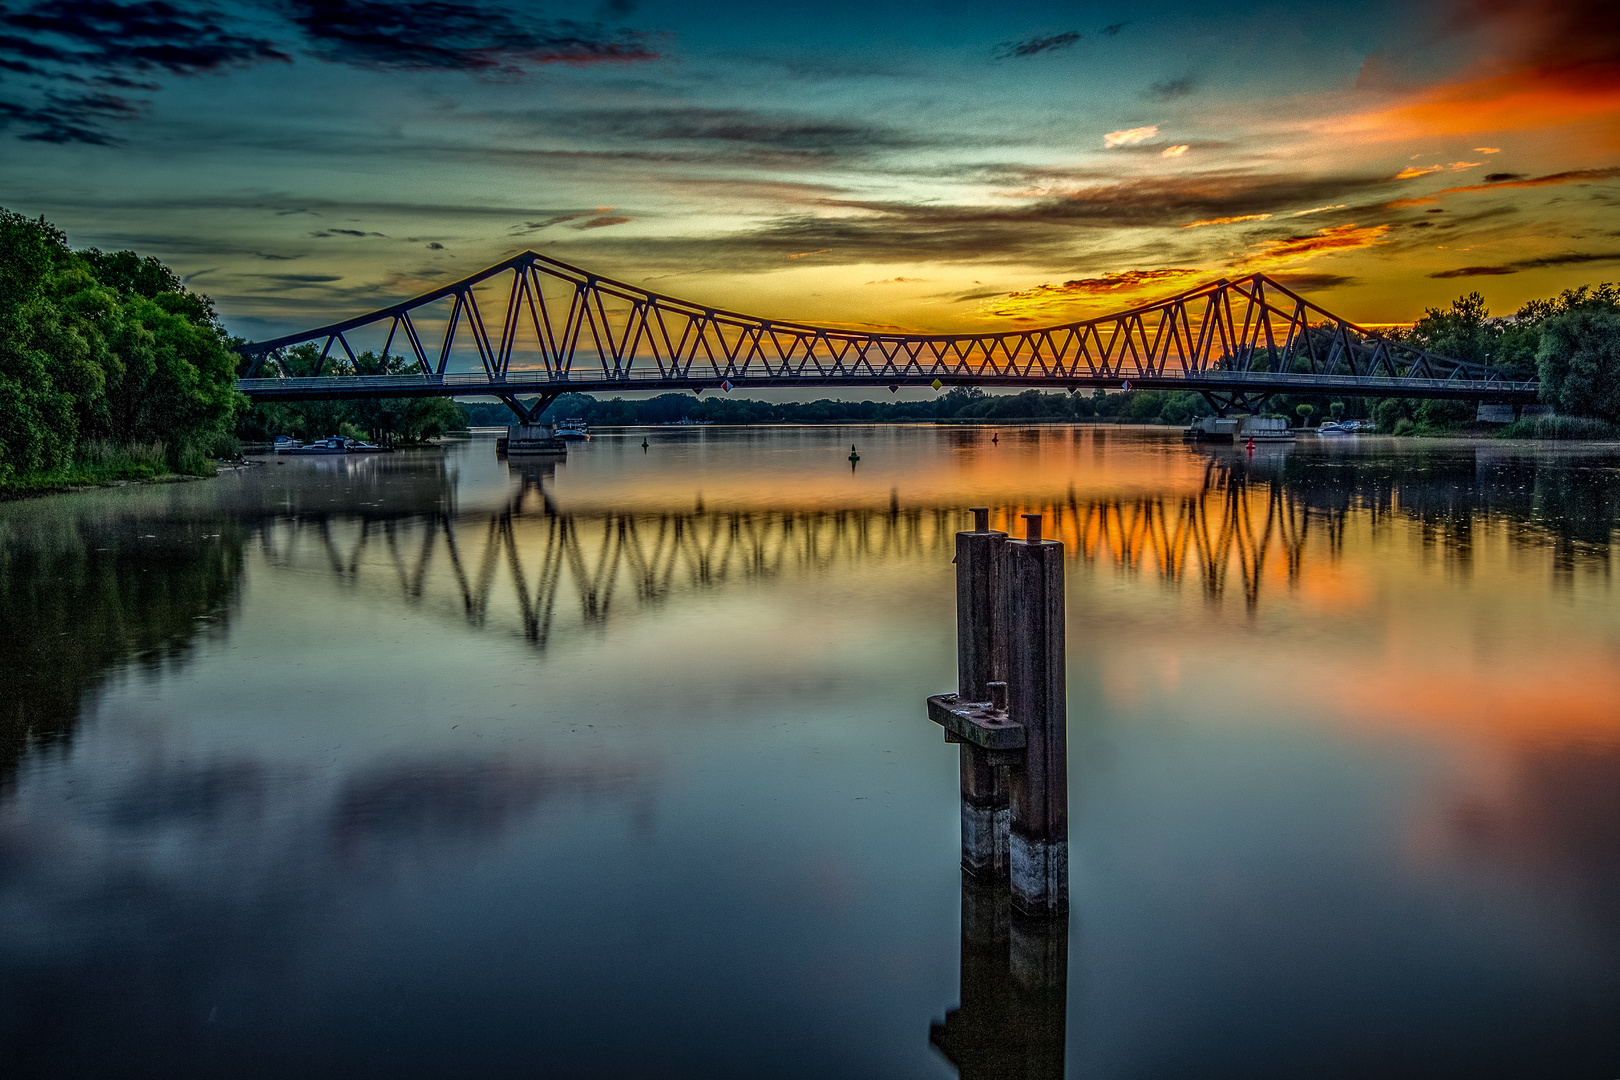 Seegartenbrücke im Sonnenuntergang